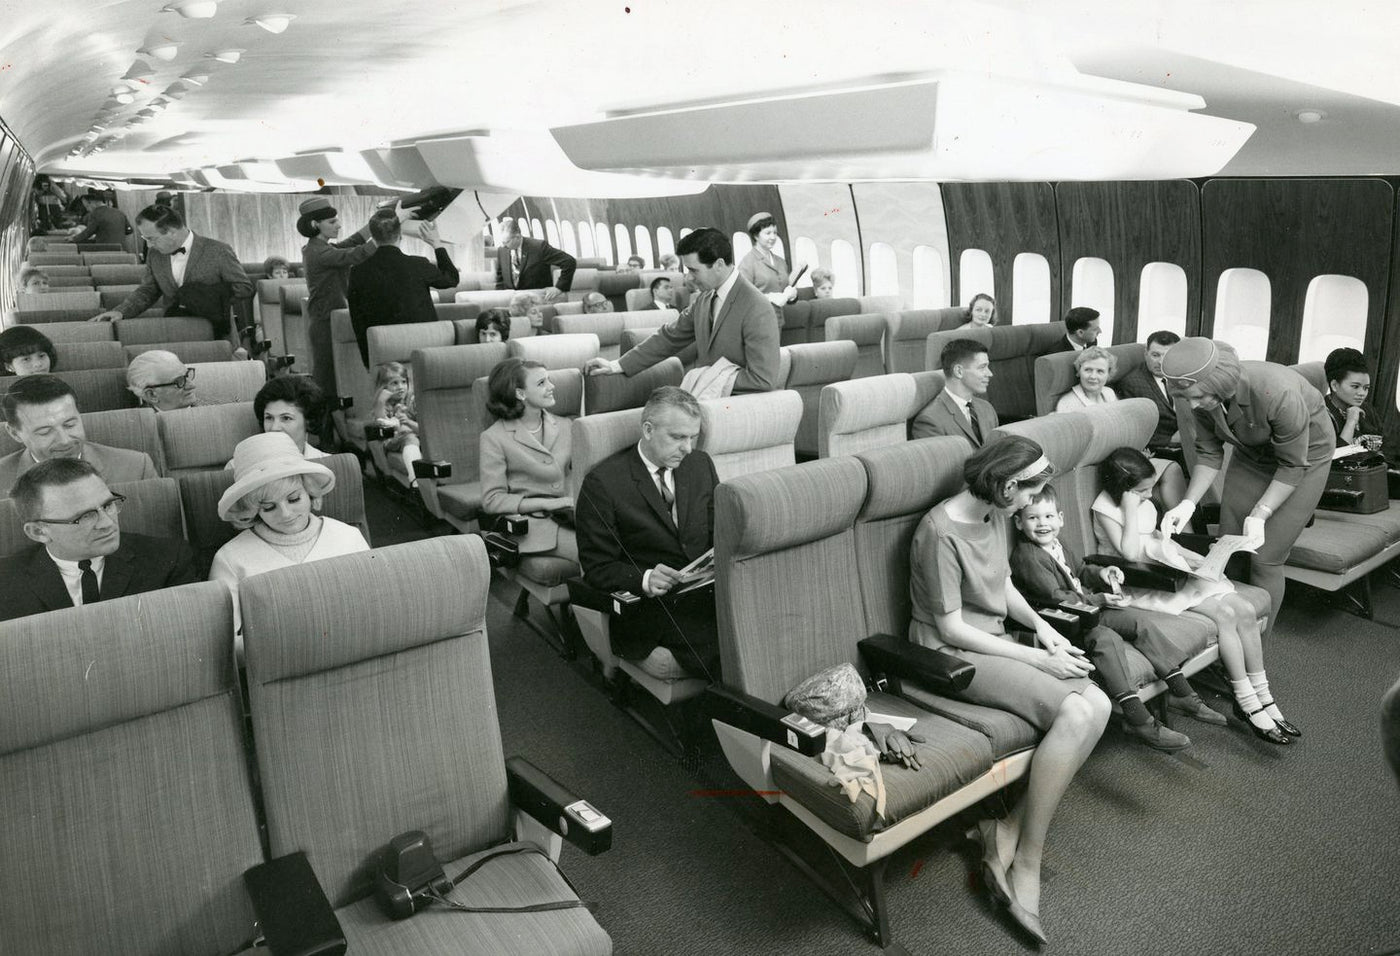 vintage airline photo